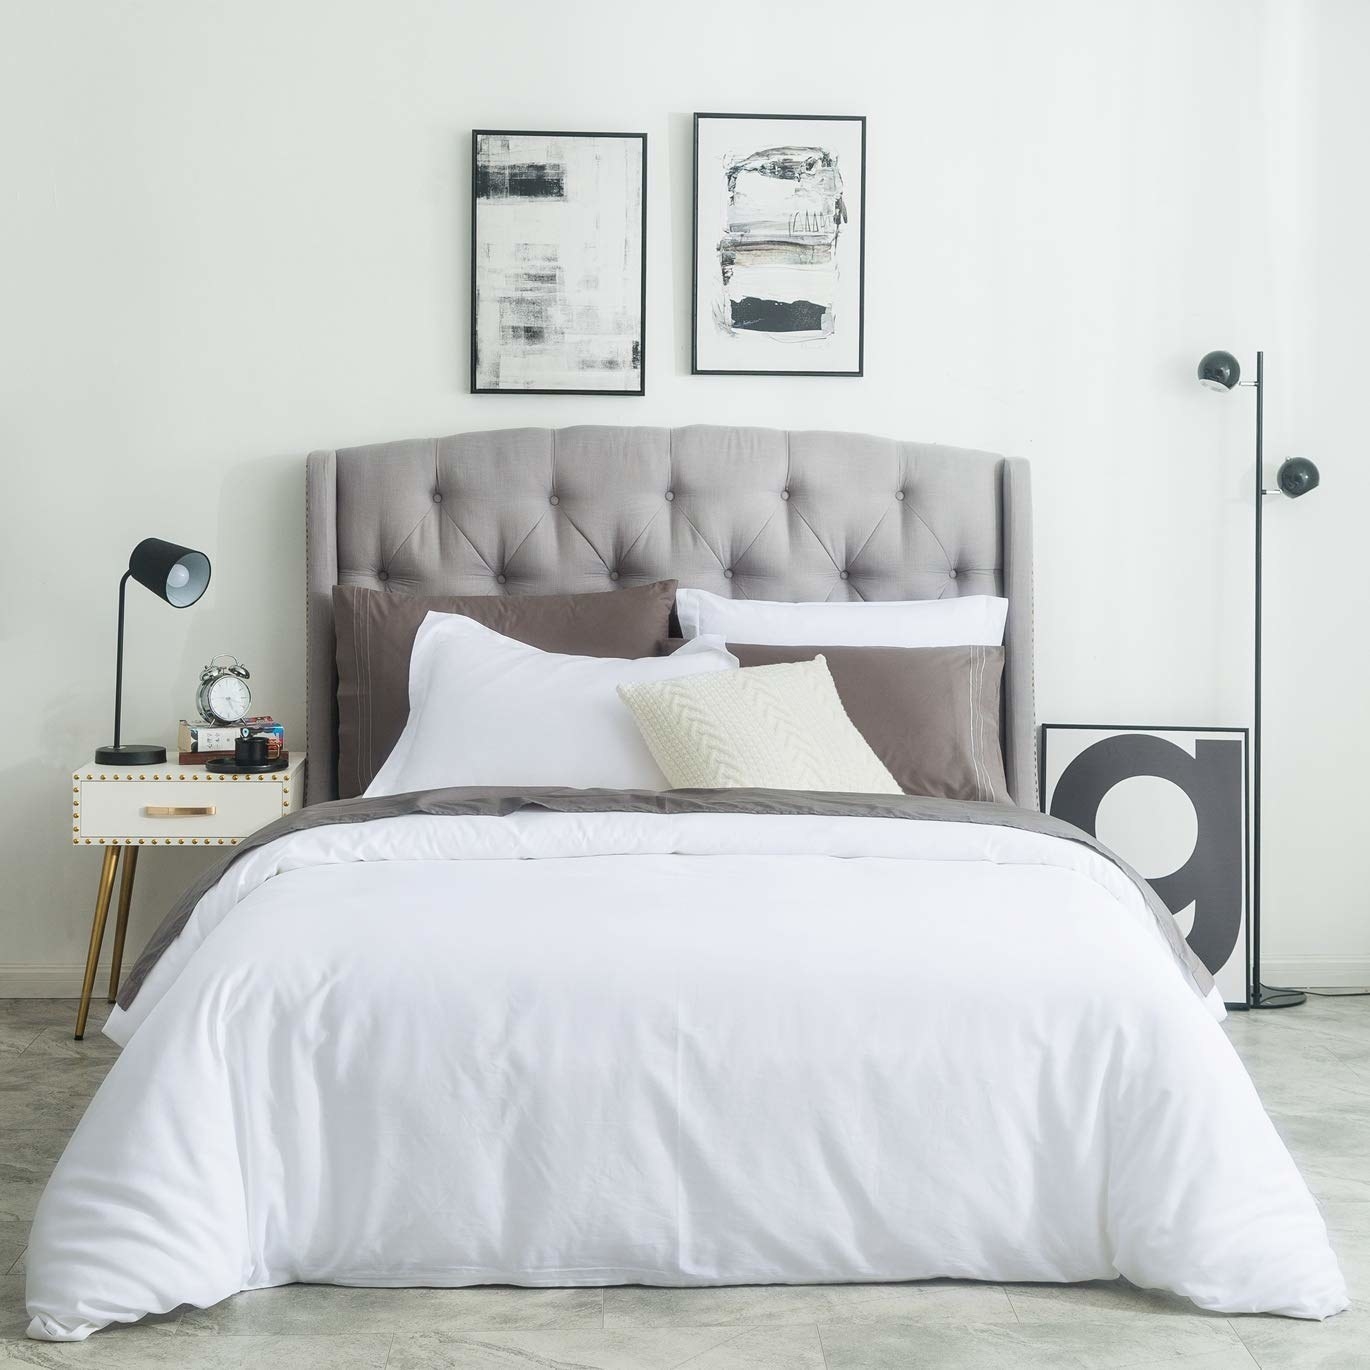 the white duvet set with grey pillows